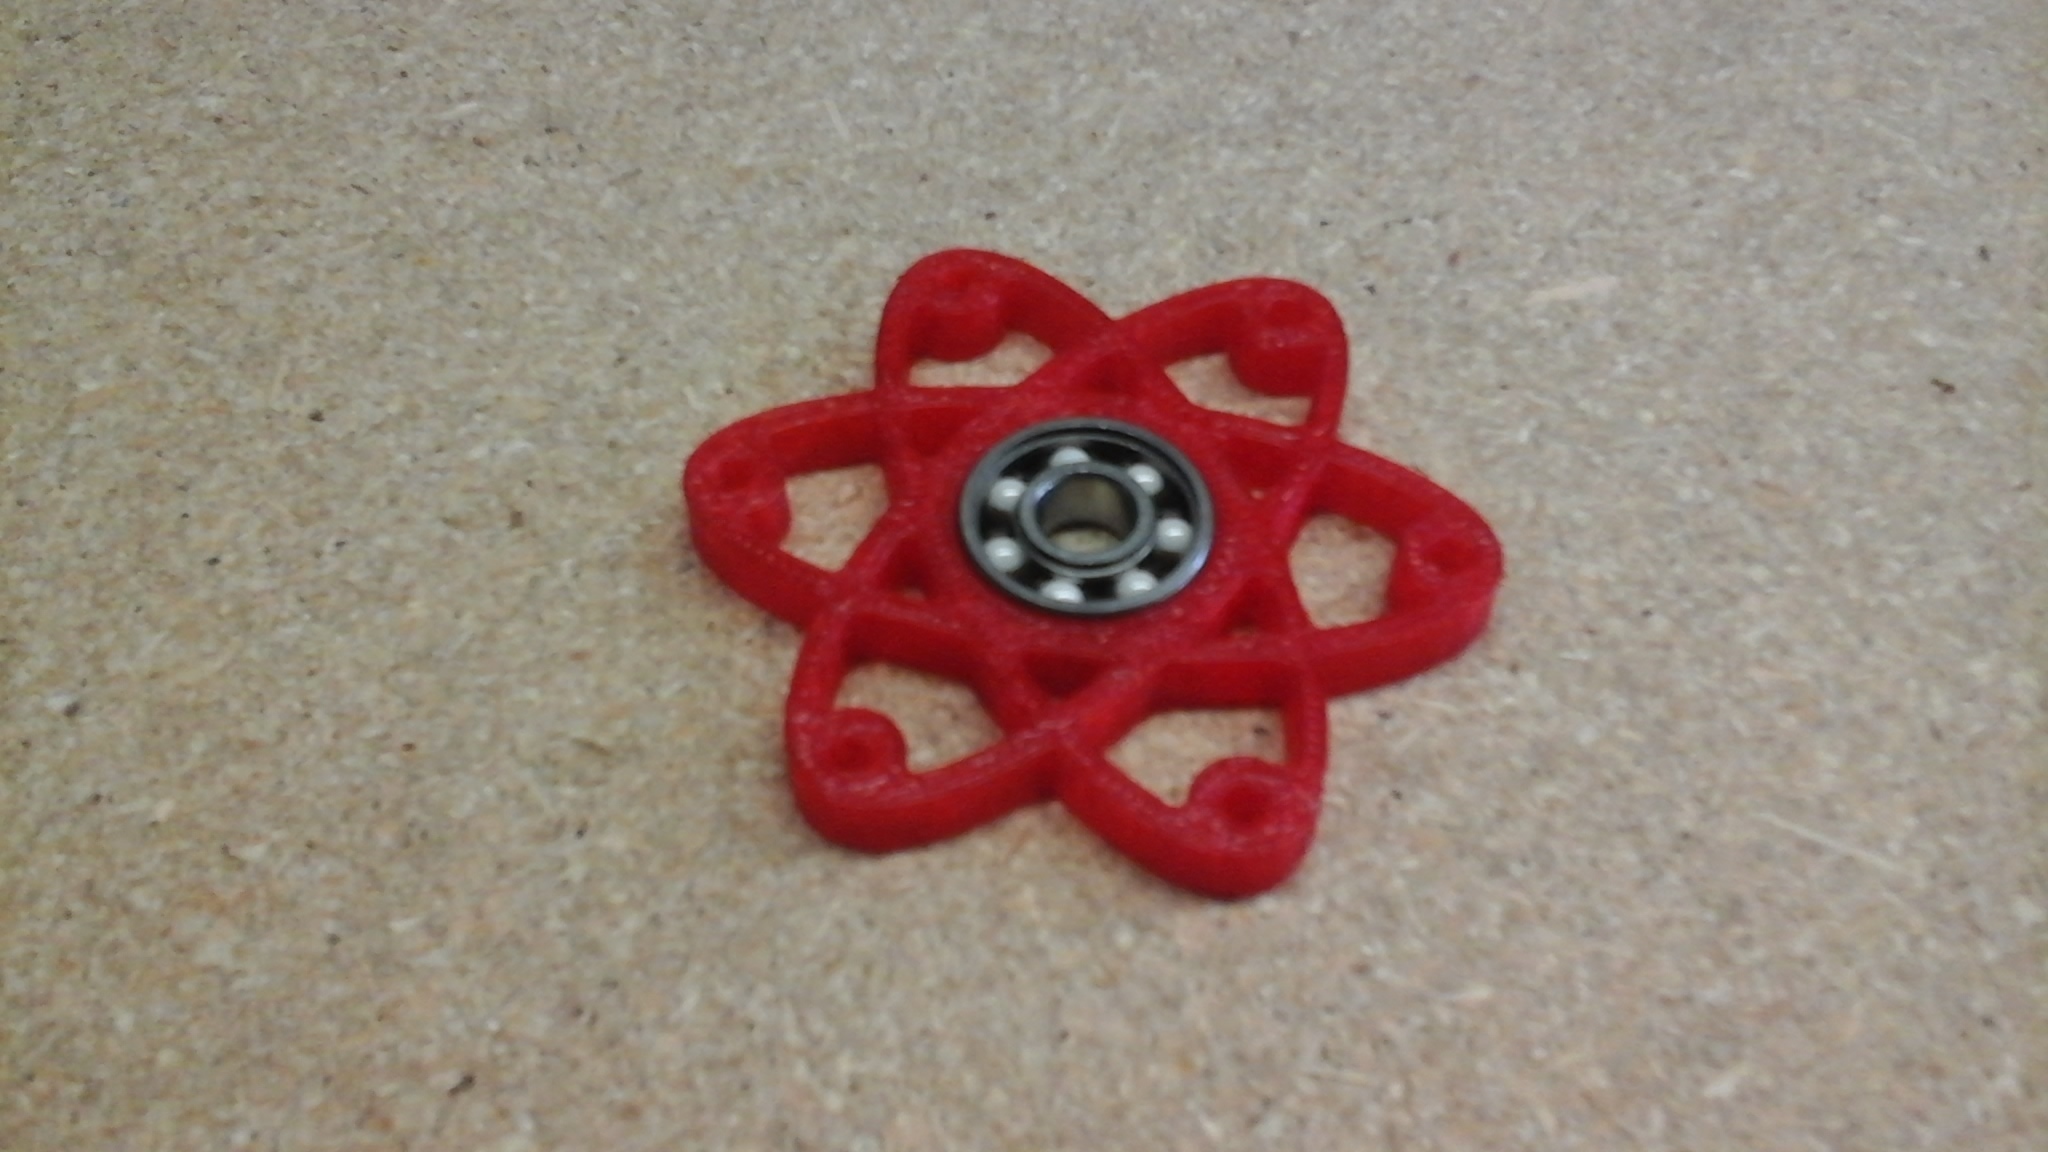 World's smallest 3D printed fidget spinner developed - Daily Excelsior